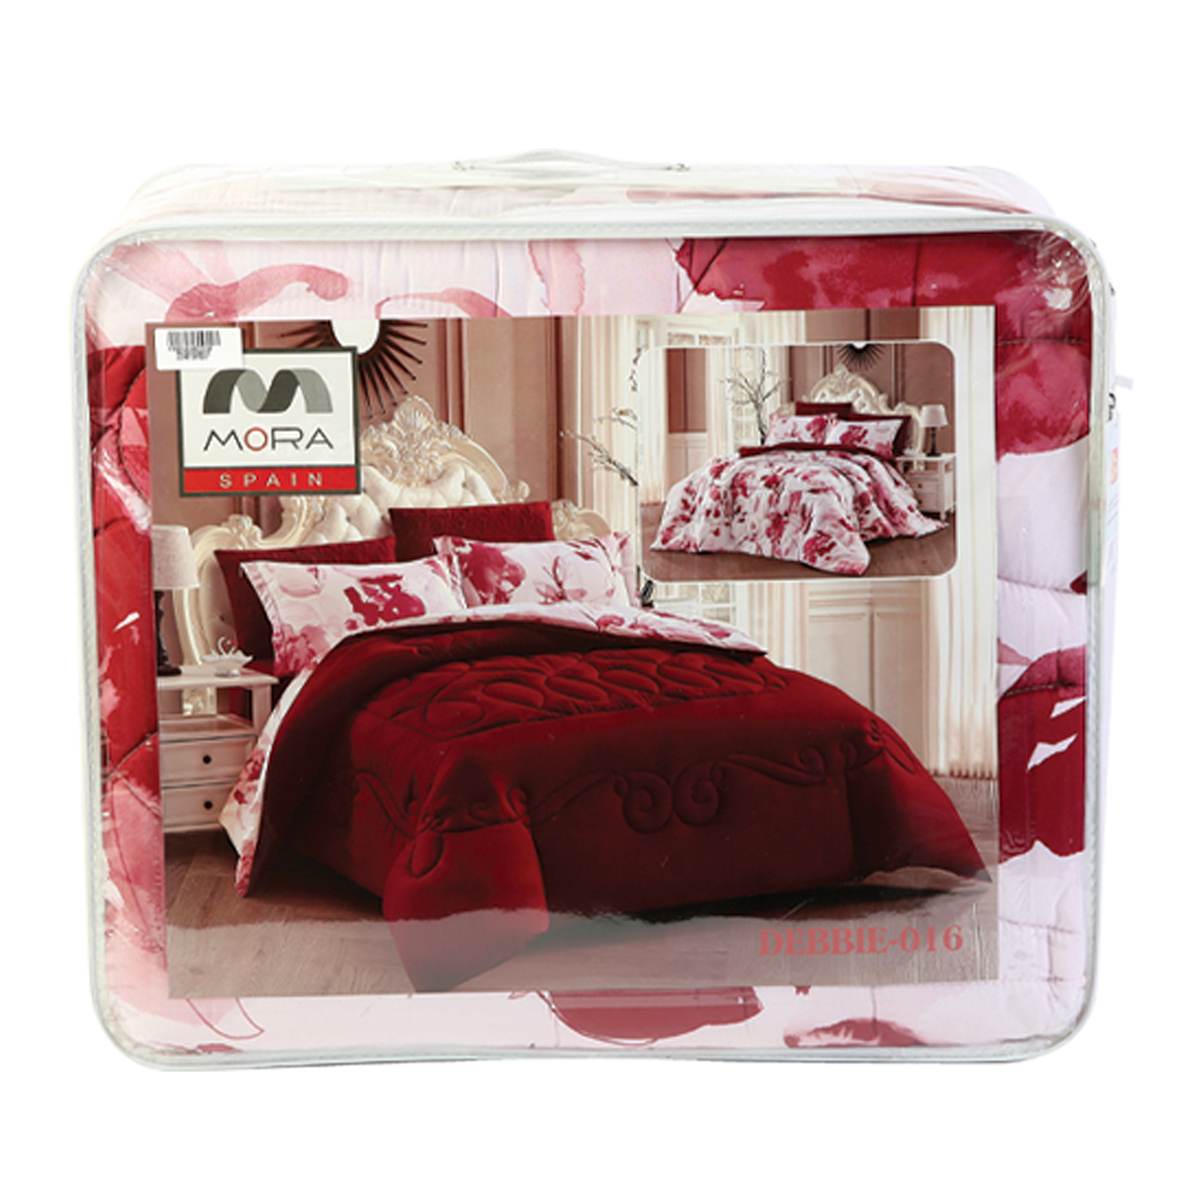 Dabbous Comforter King 6Pcs Set Assorted Colors & Designs